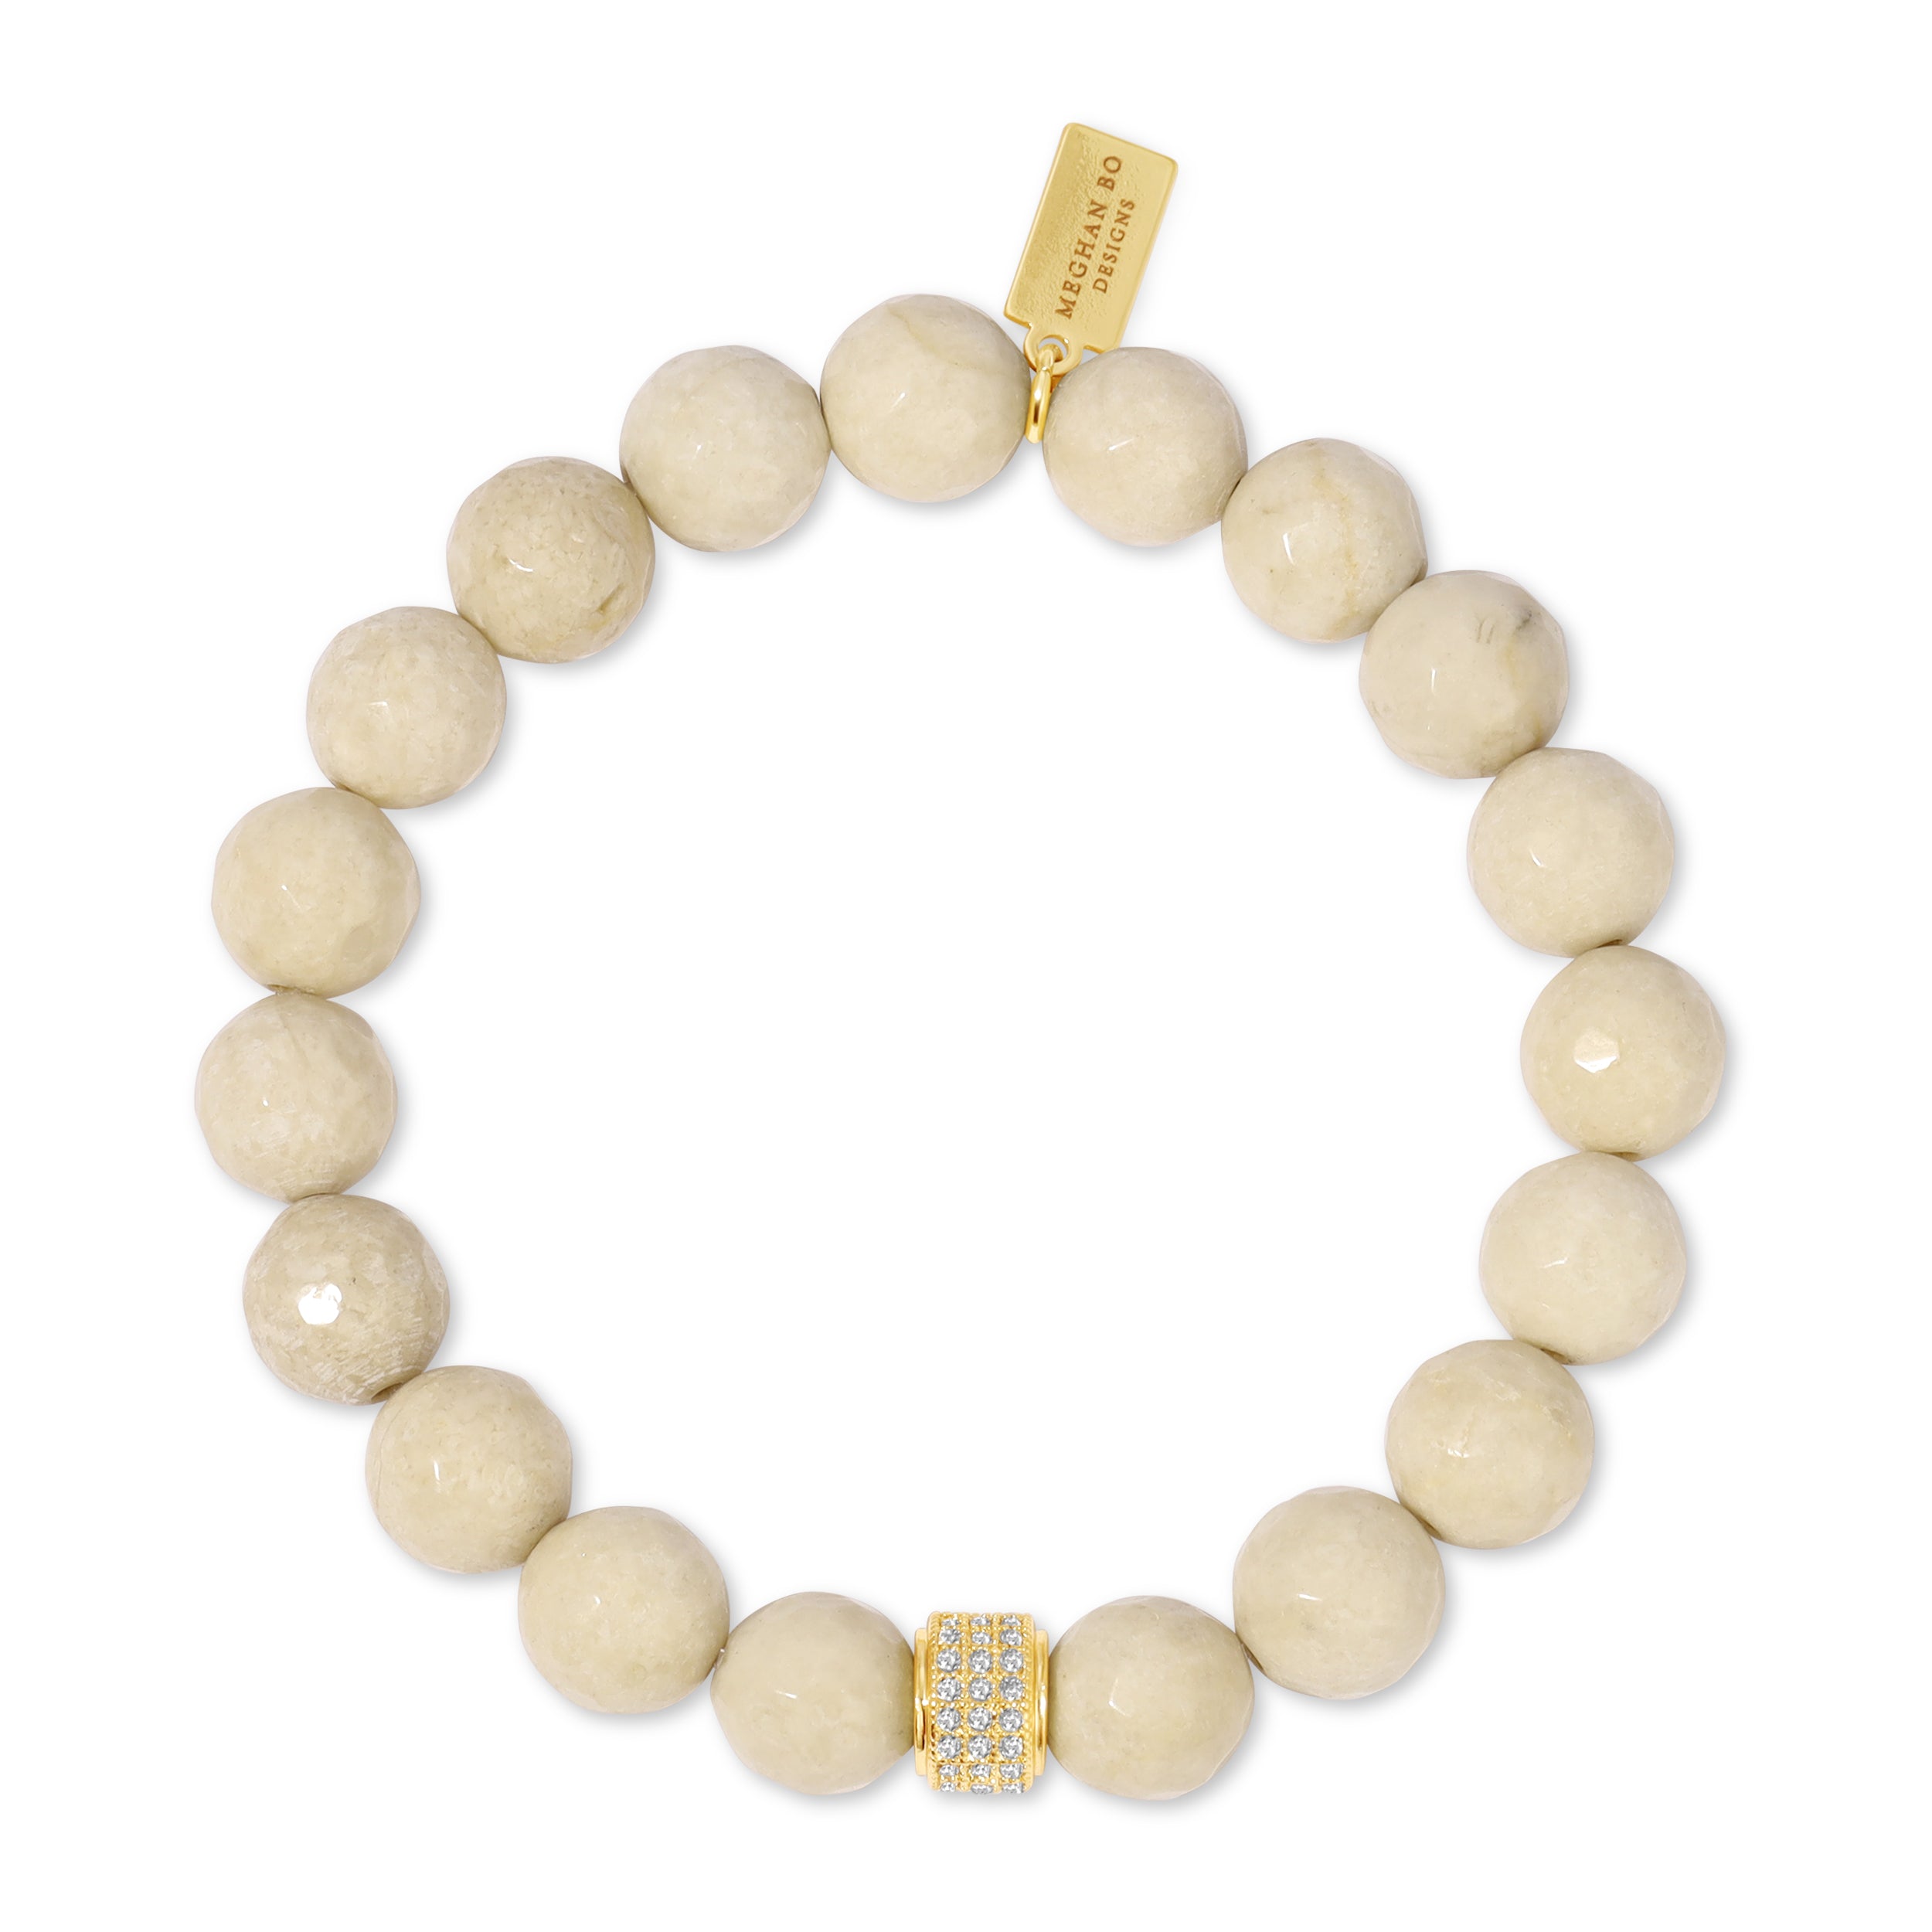 In Your Feelings Letter Bead Bracelets 'That Bitch' White Gold Letters with  blue aventurine stone beads | Buy GemCadet bracelet Online